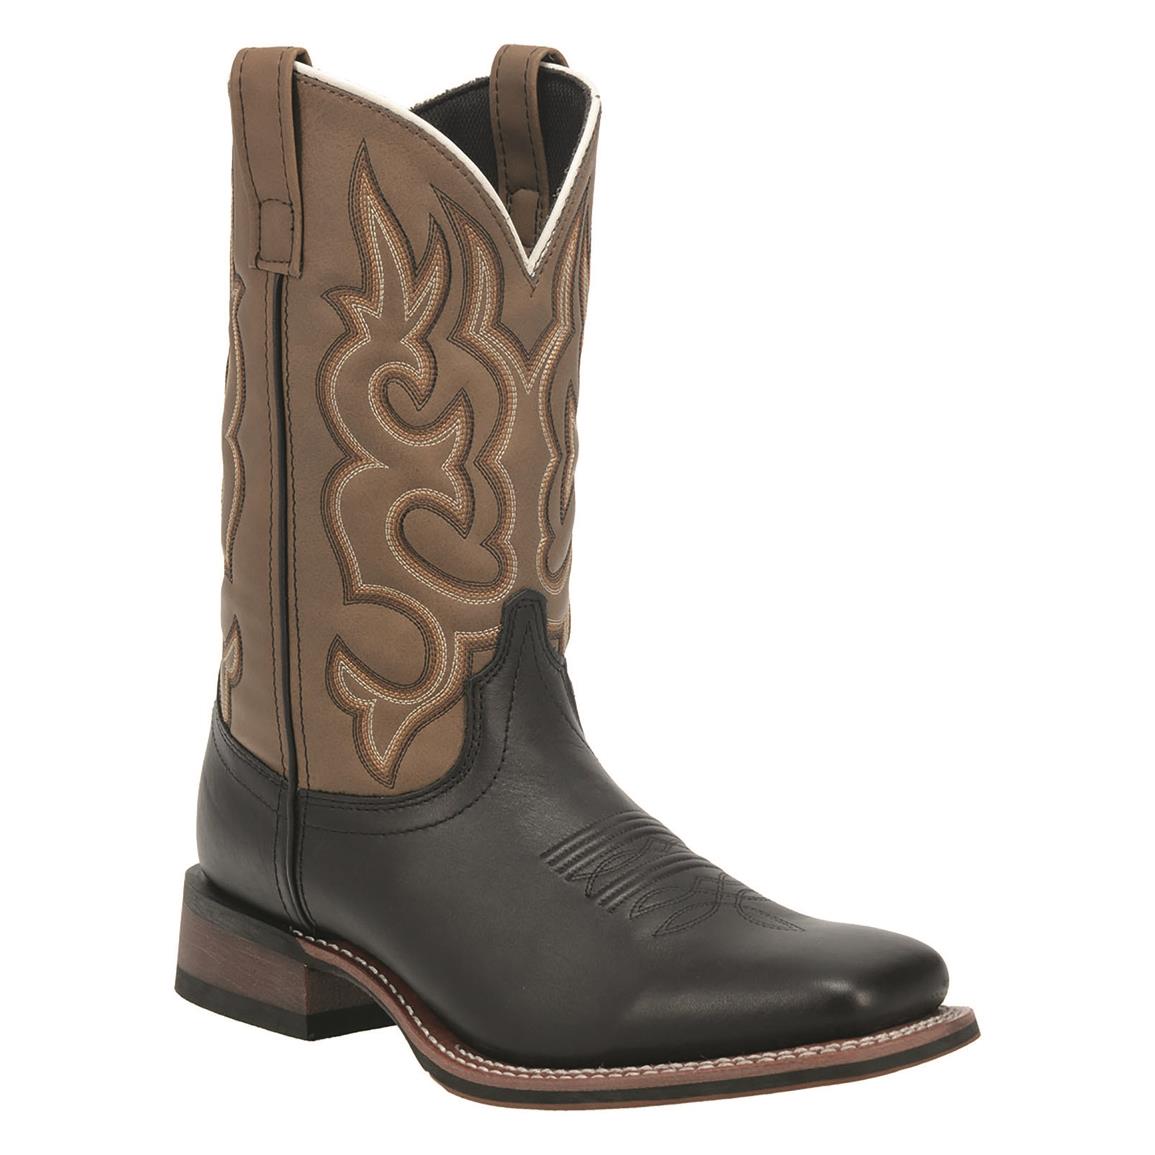 Laredo Men's Lodi Leather Western Boots, Black/sand